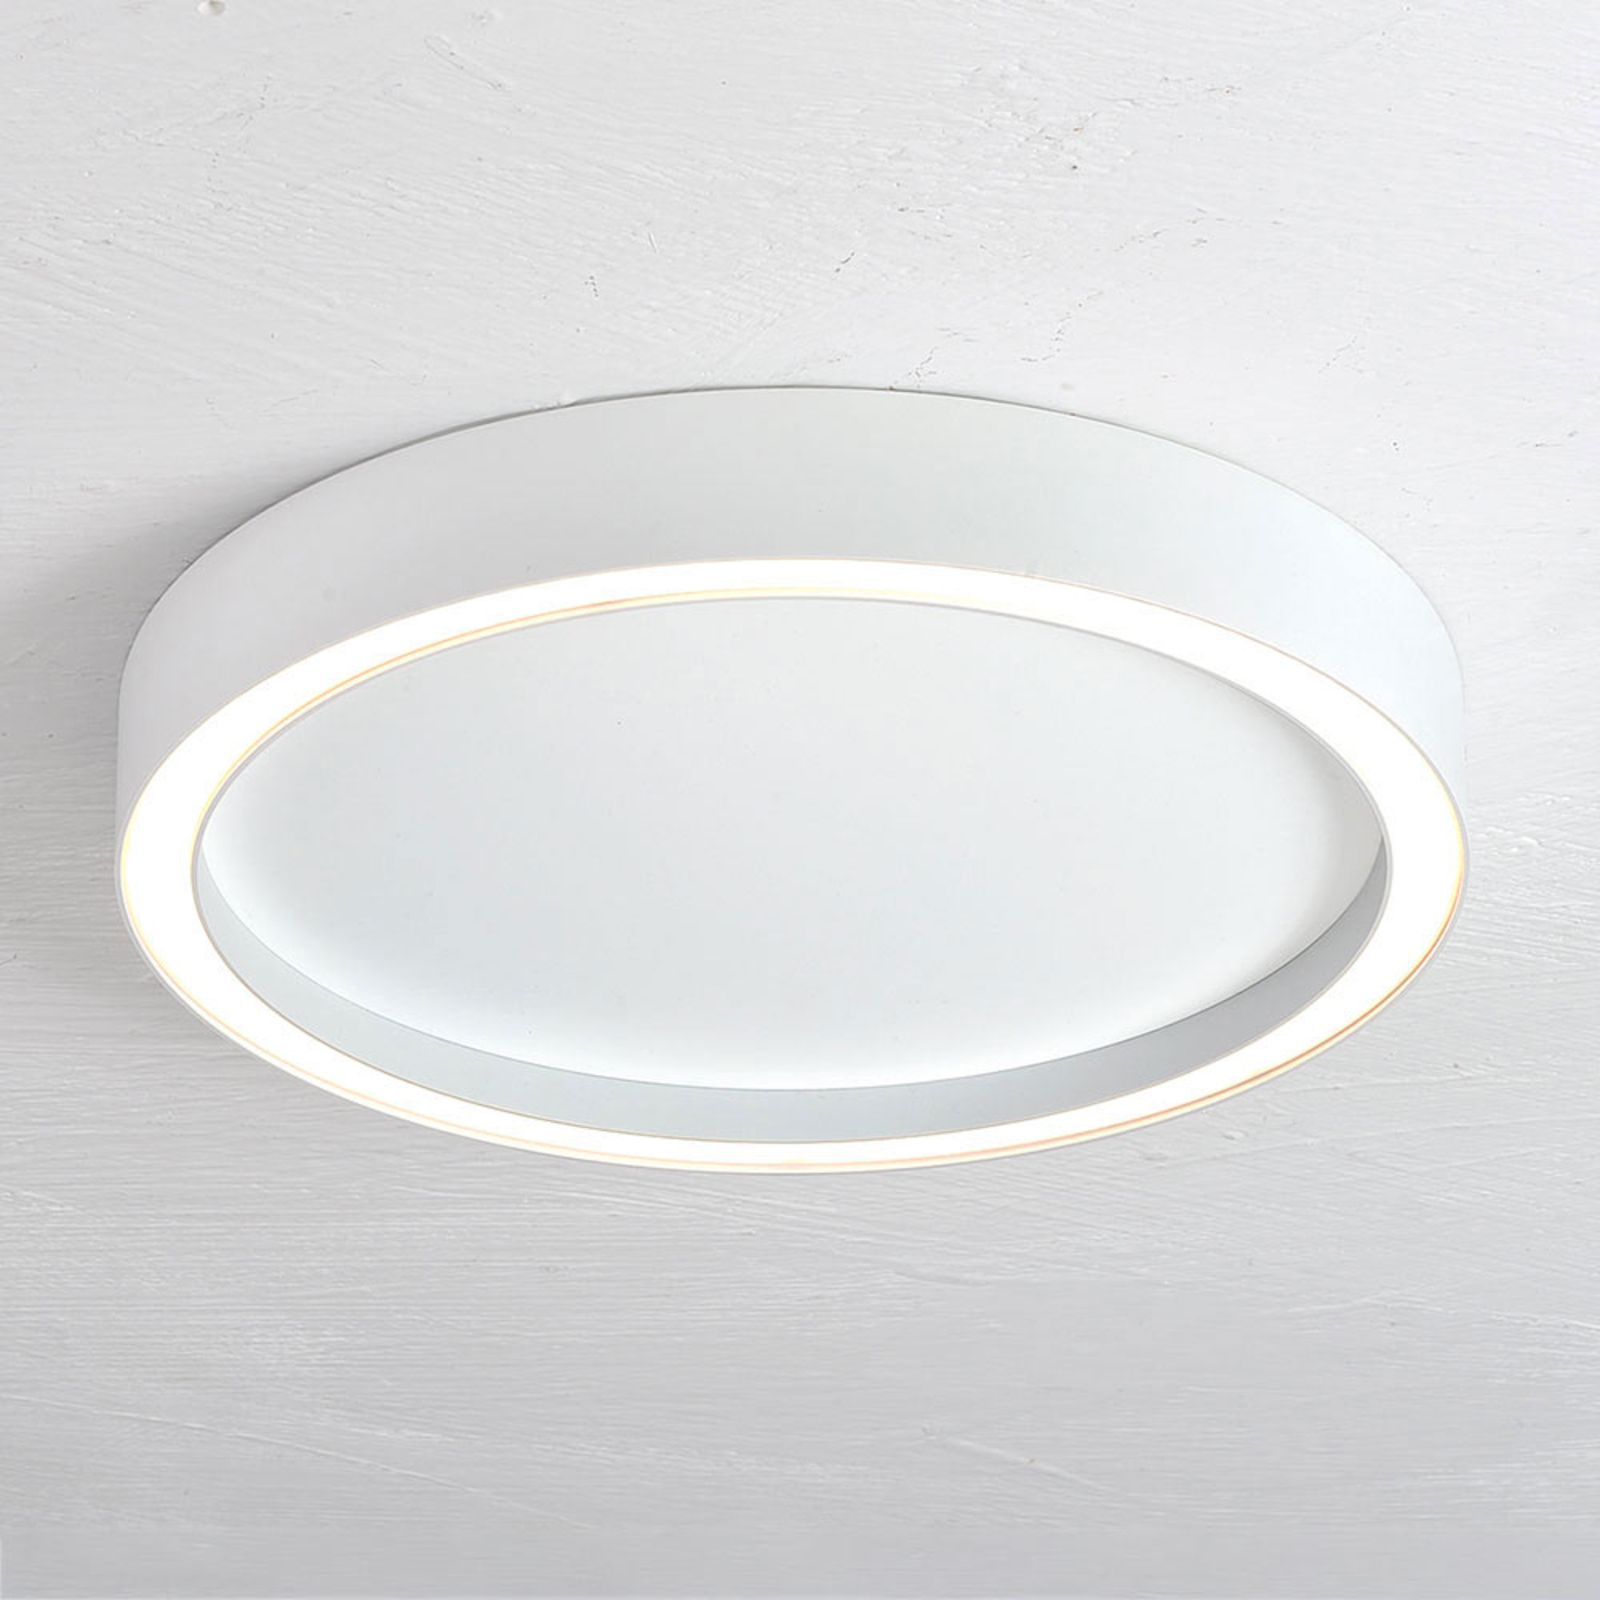 Bopp Aura stropné LED svietidlo Ø 40cm biele/biele